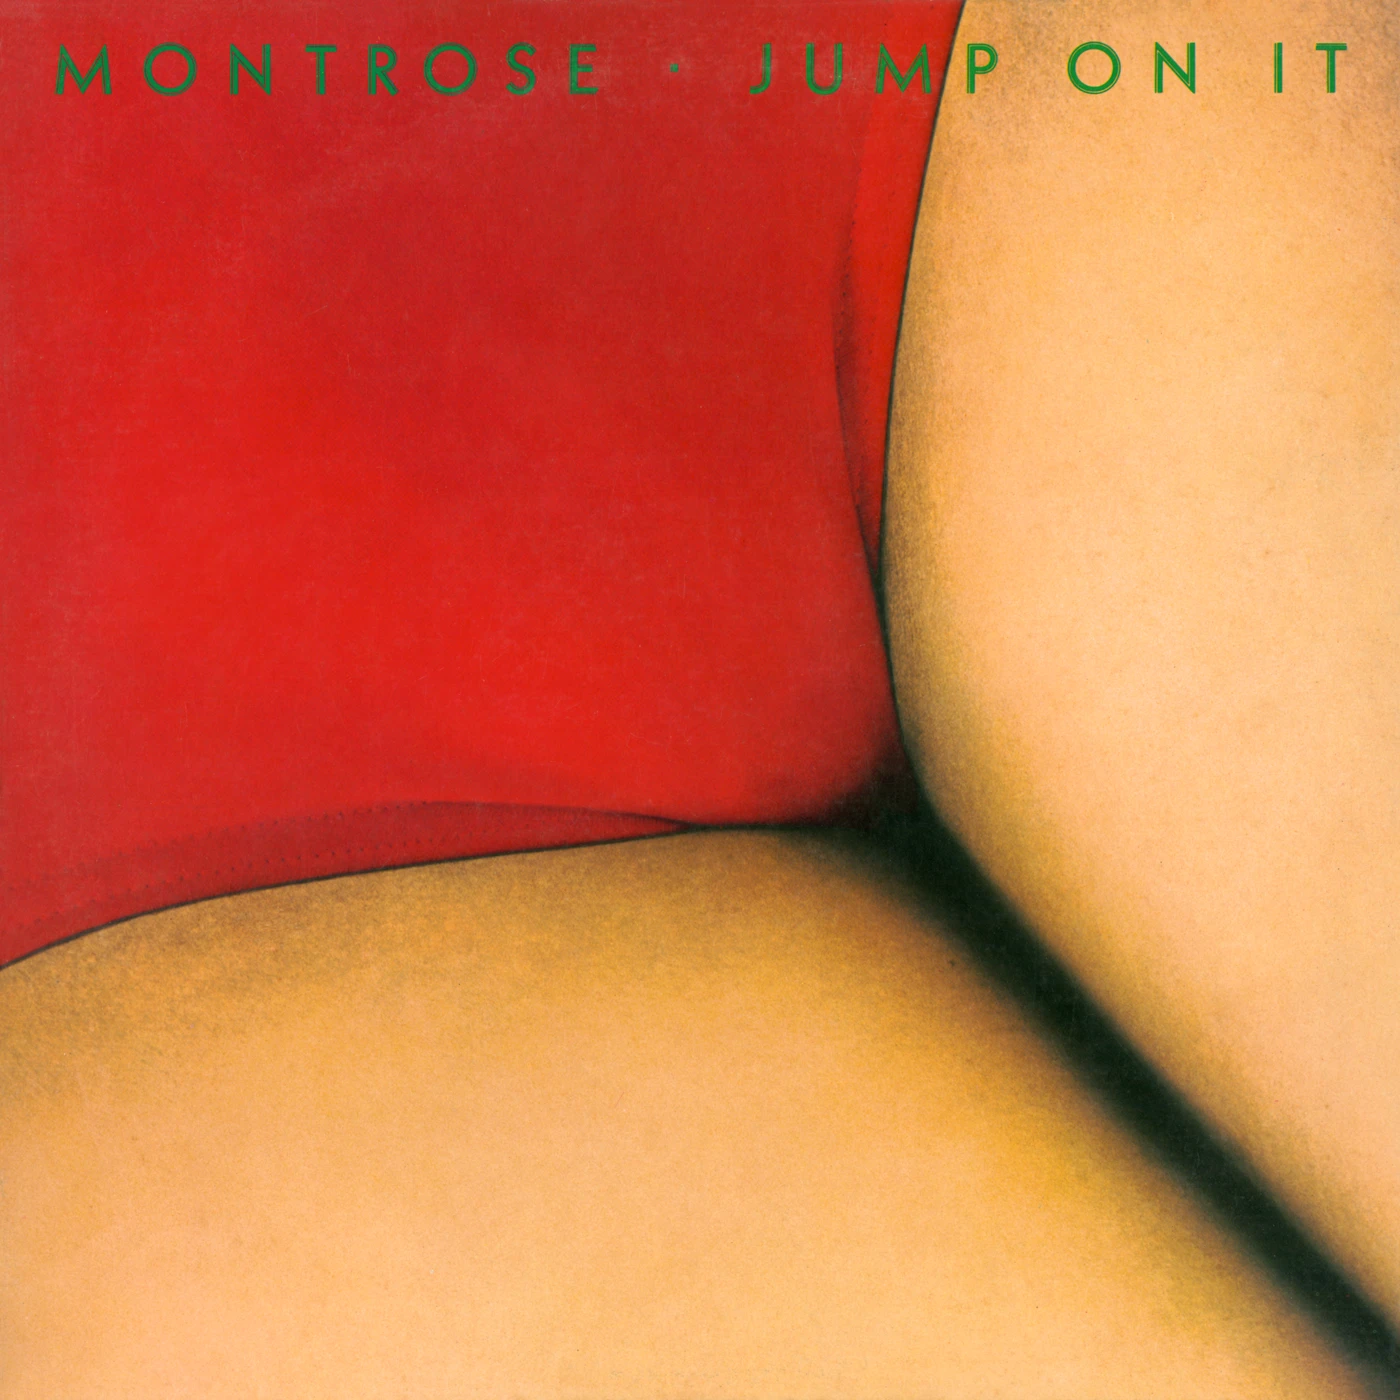 Jump On It – Montrose